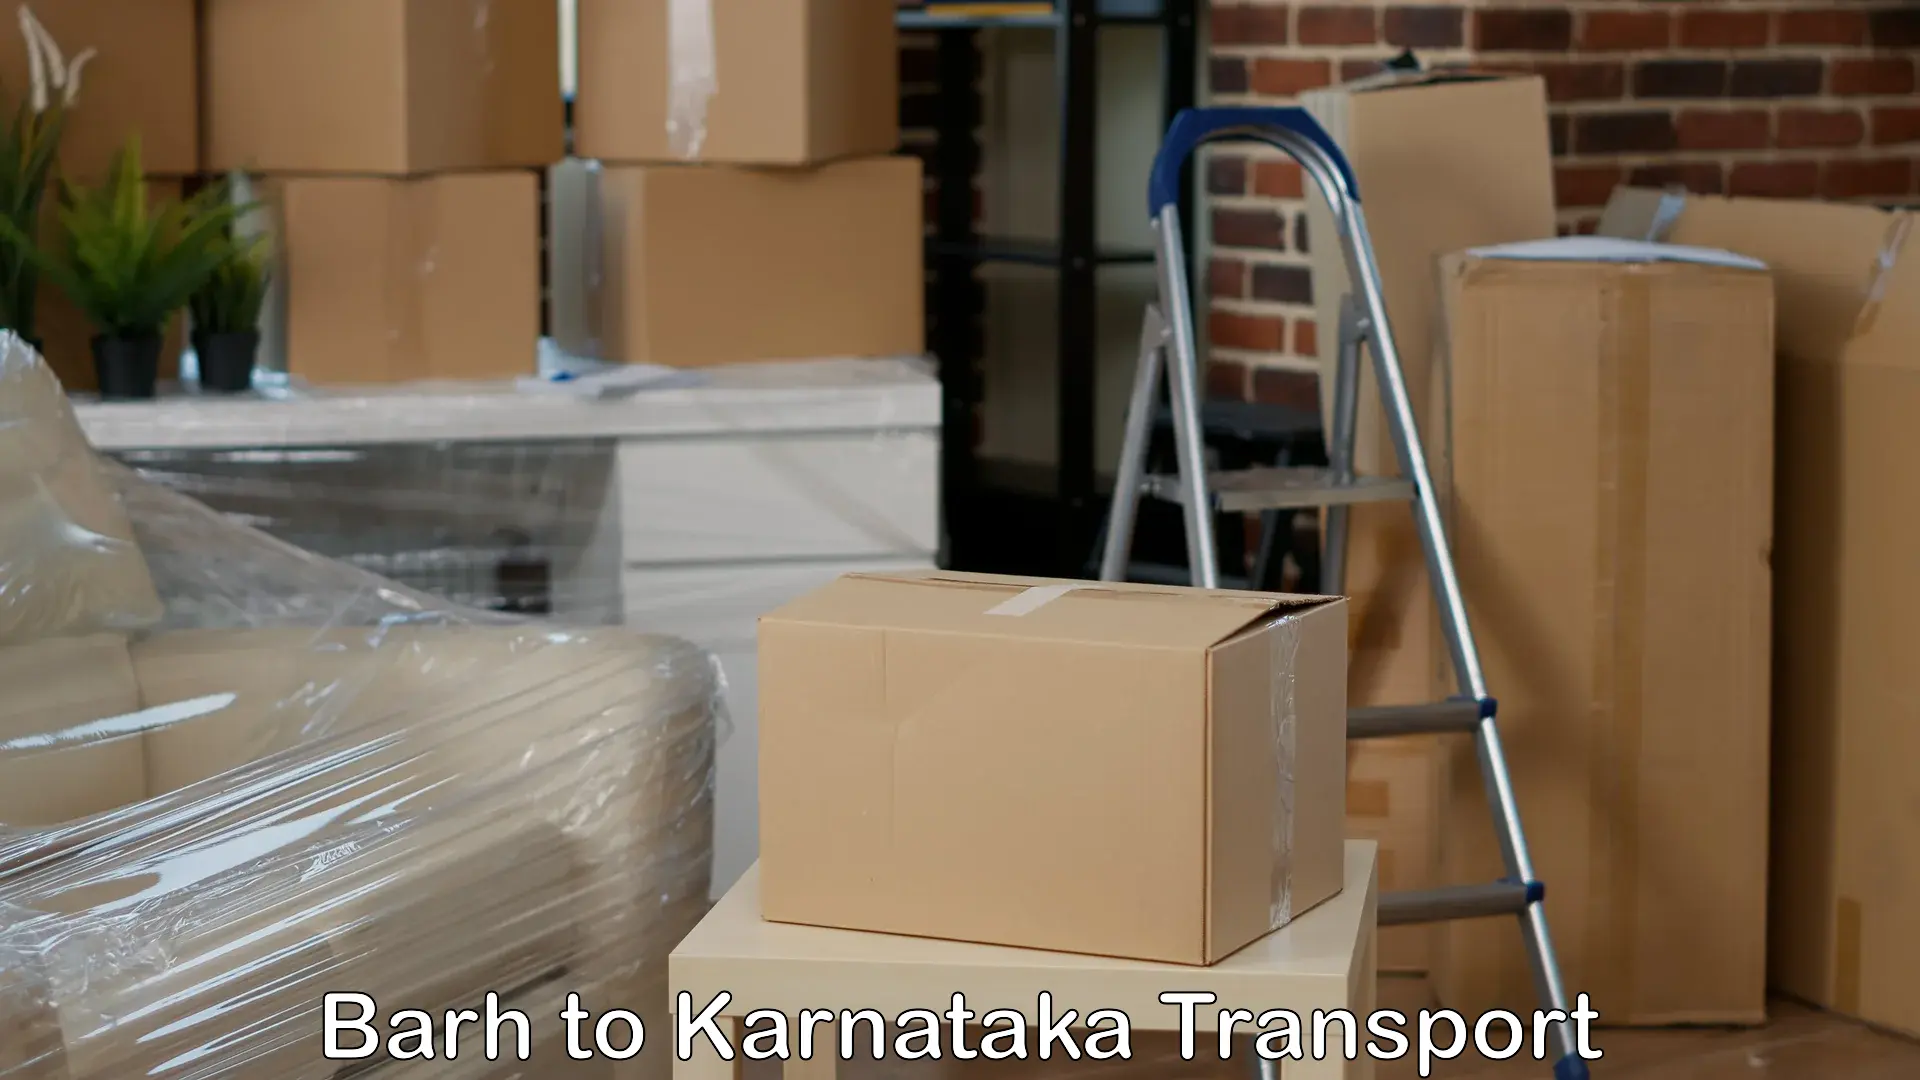 Truck transport companies in India Barh to Shorapur